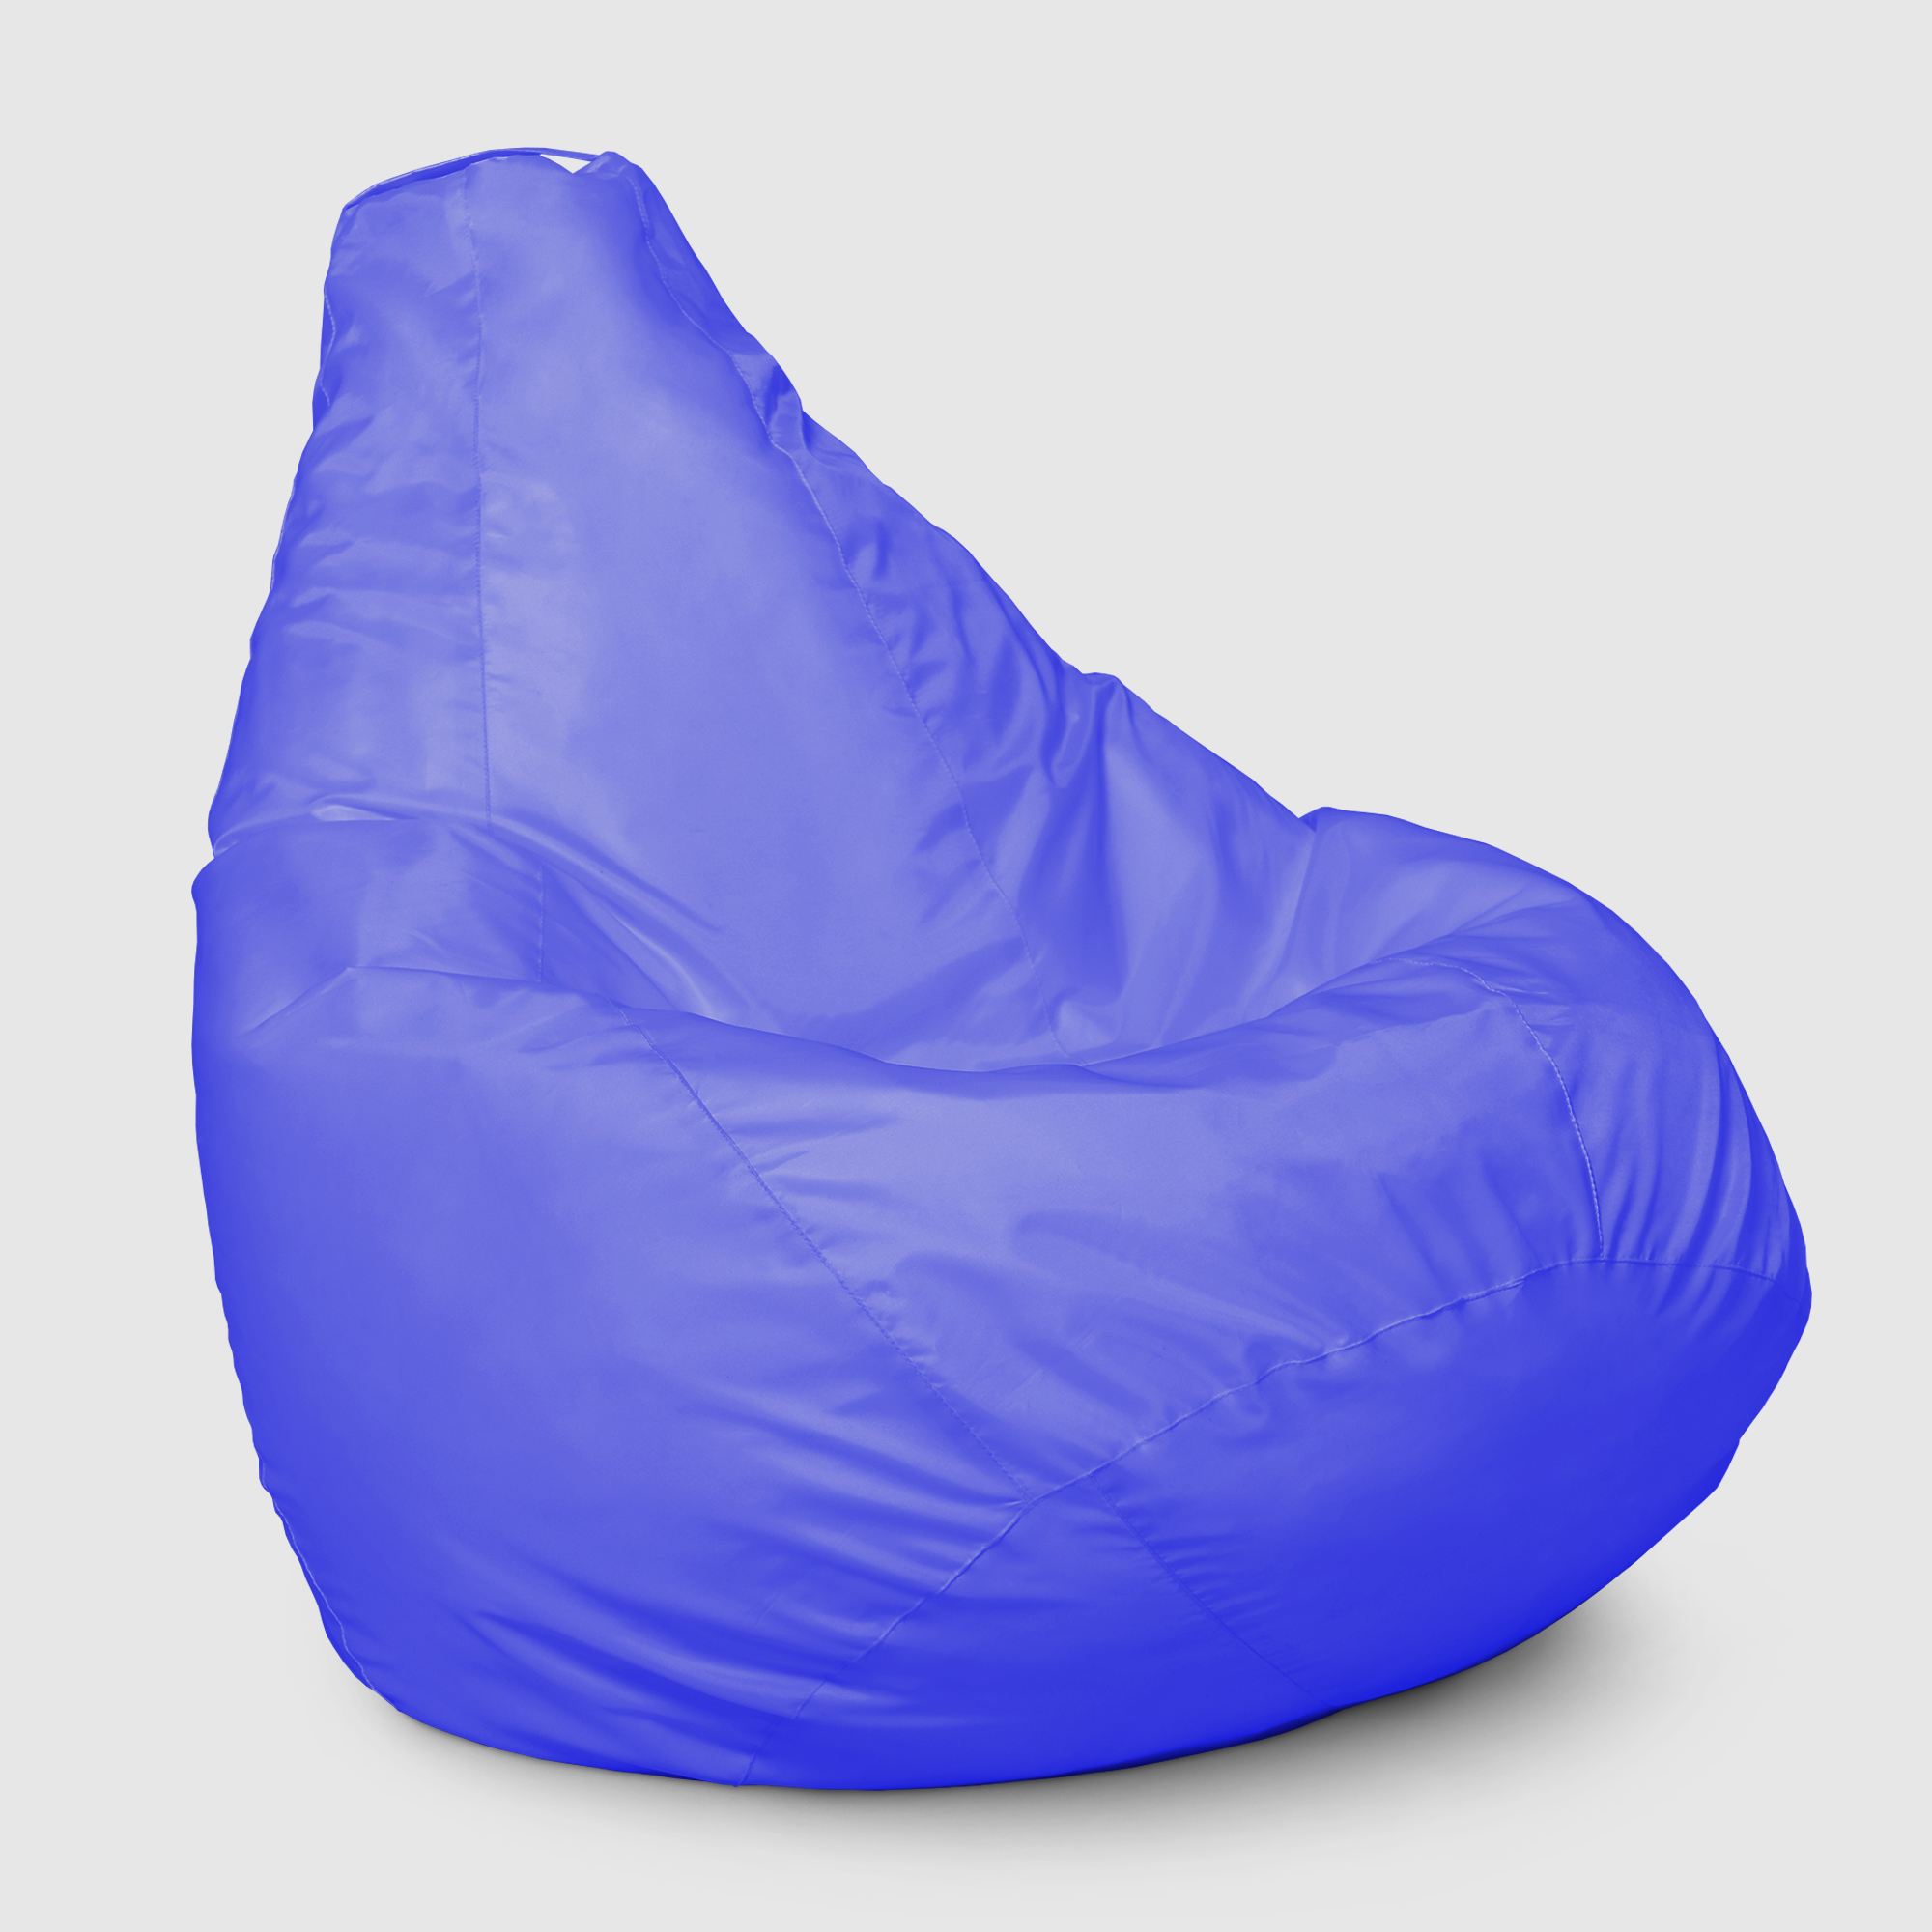 Кресло мешок Dreambag Меган xl Синее 85х85х125 см кресло мешок dreambag sweet xl